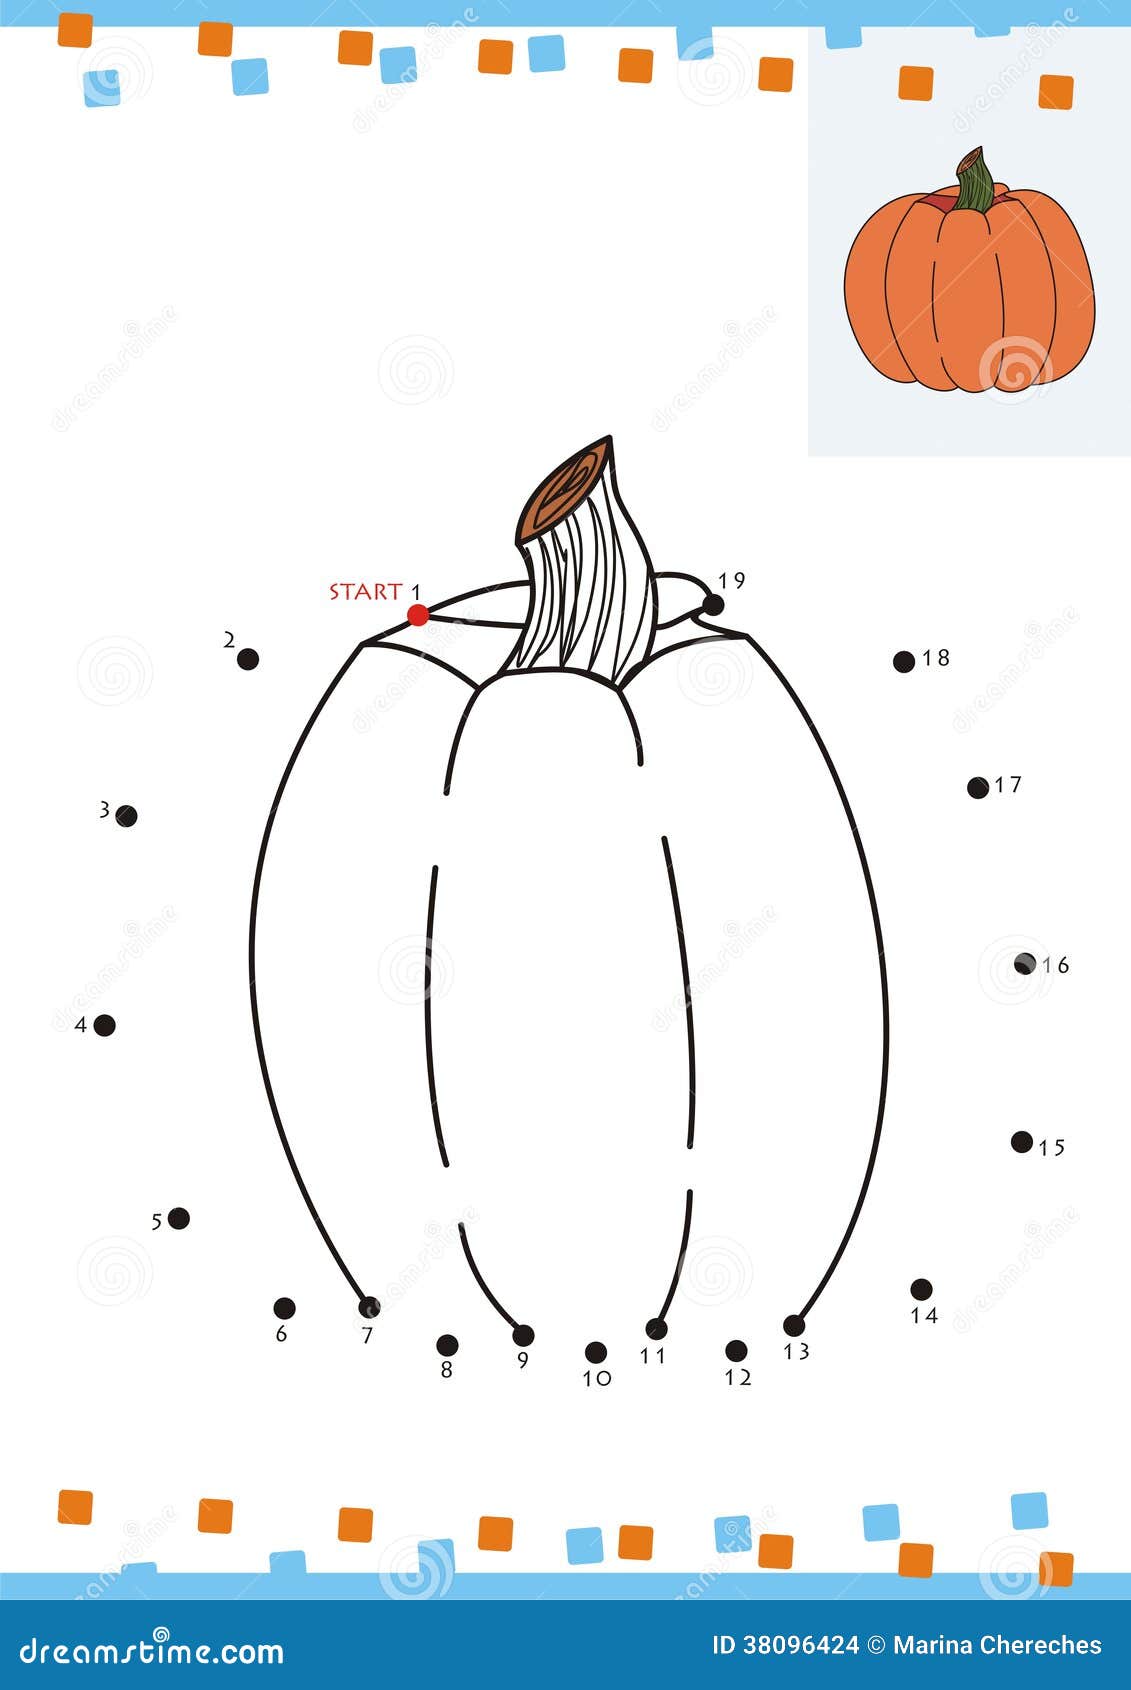 Coloring Book Dot To Dot. The Pumpkin Stock Vector - Image: 38096424